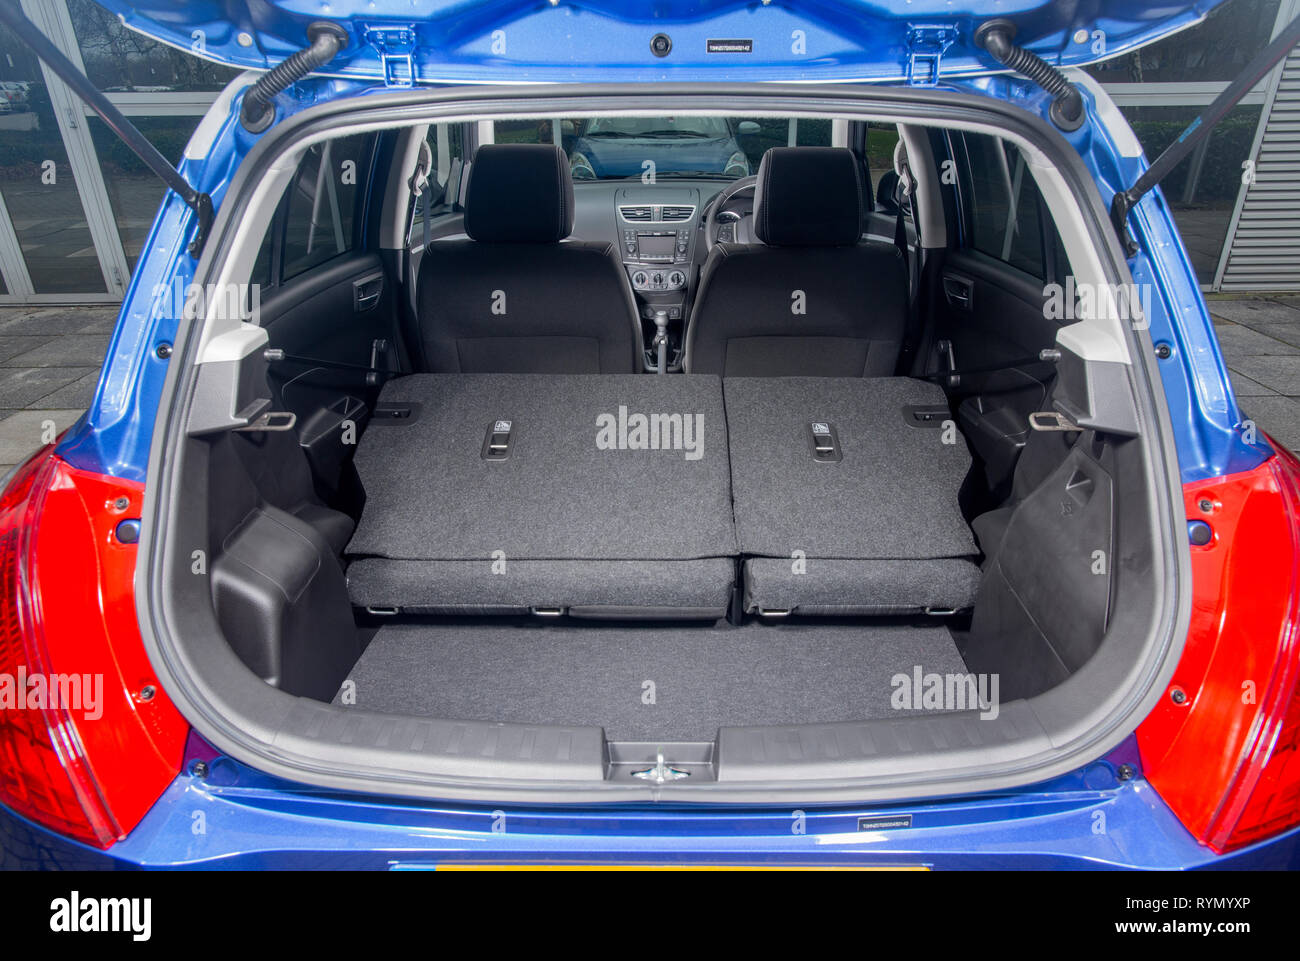 2014 Suzuki Swift voiture compacte berline chaud SZL Banque D'Images